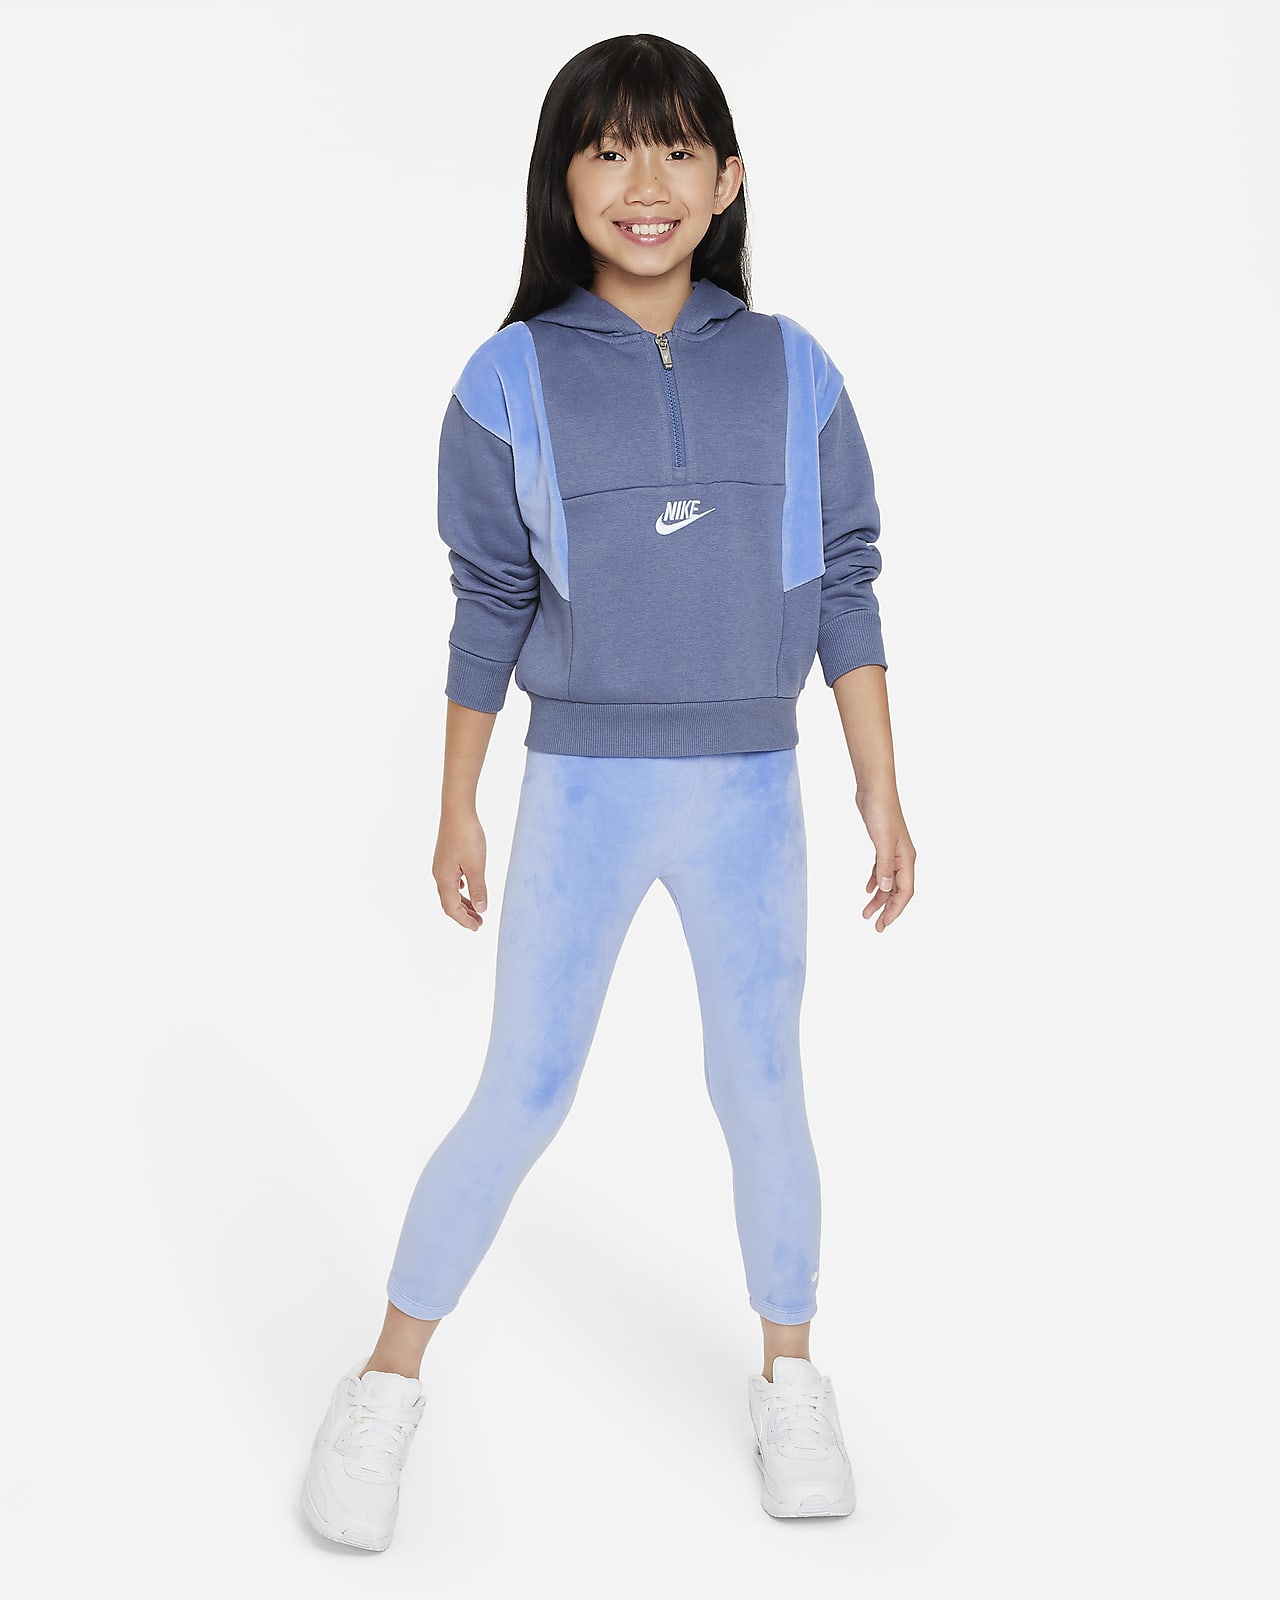 bebe Girls' Legging Sweatsuit Set - 2 Piece Super Soft Sweatshirt